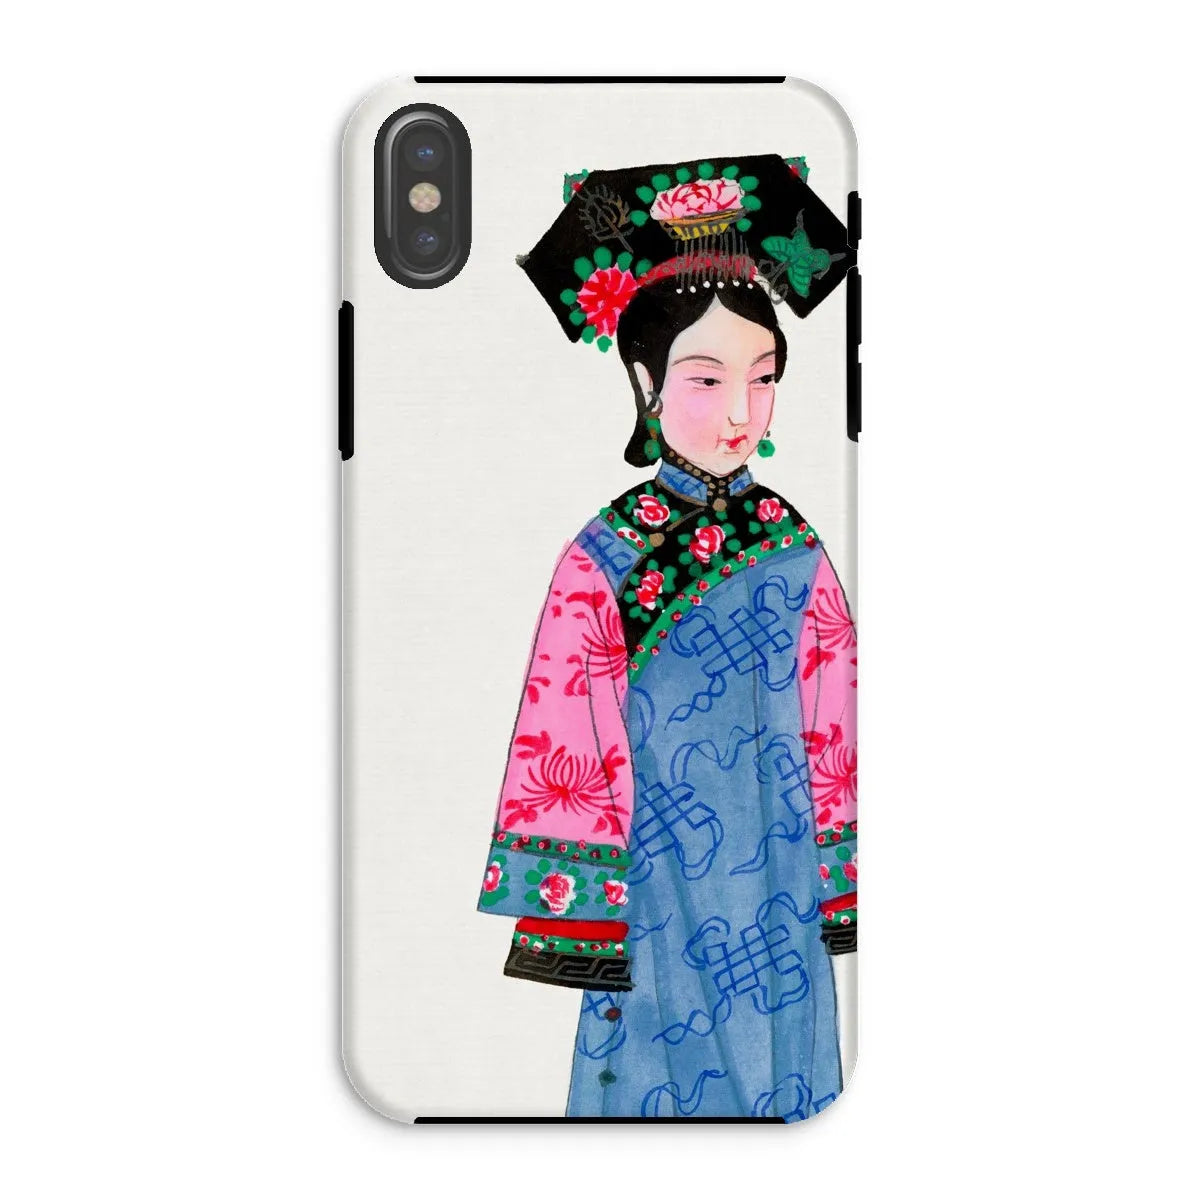 Noblewoman Too - Manchu Aesthetic Art Phone Case - Iphone Xs / Matte - Mobile Phone Cases - Aesthetic Art